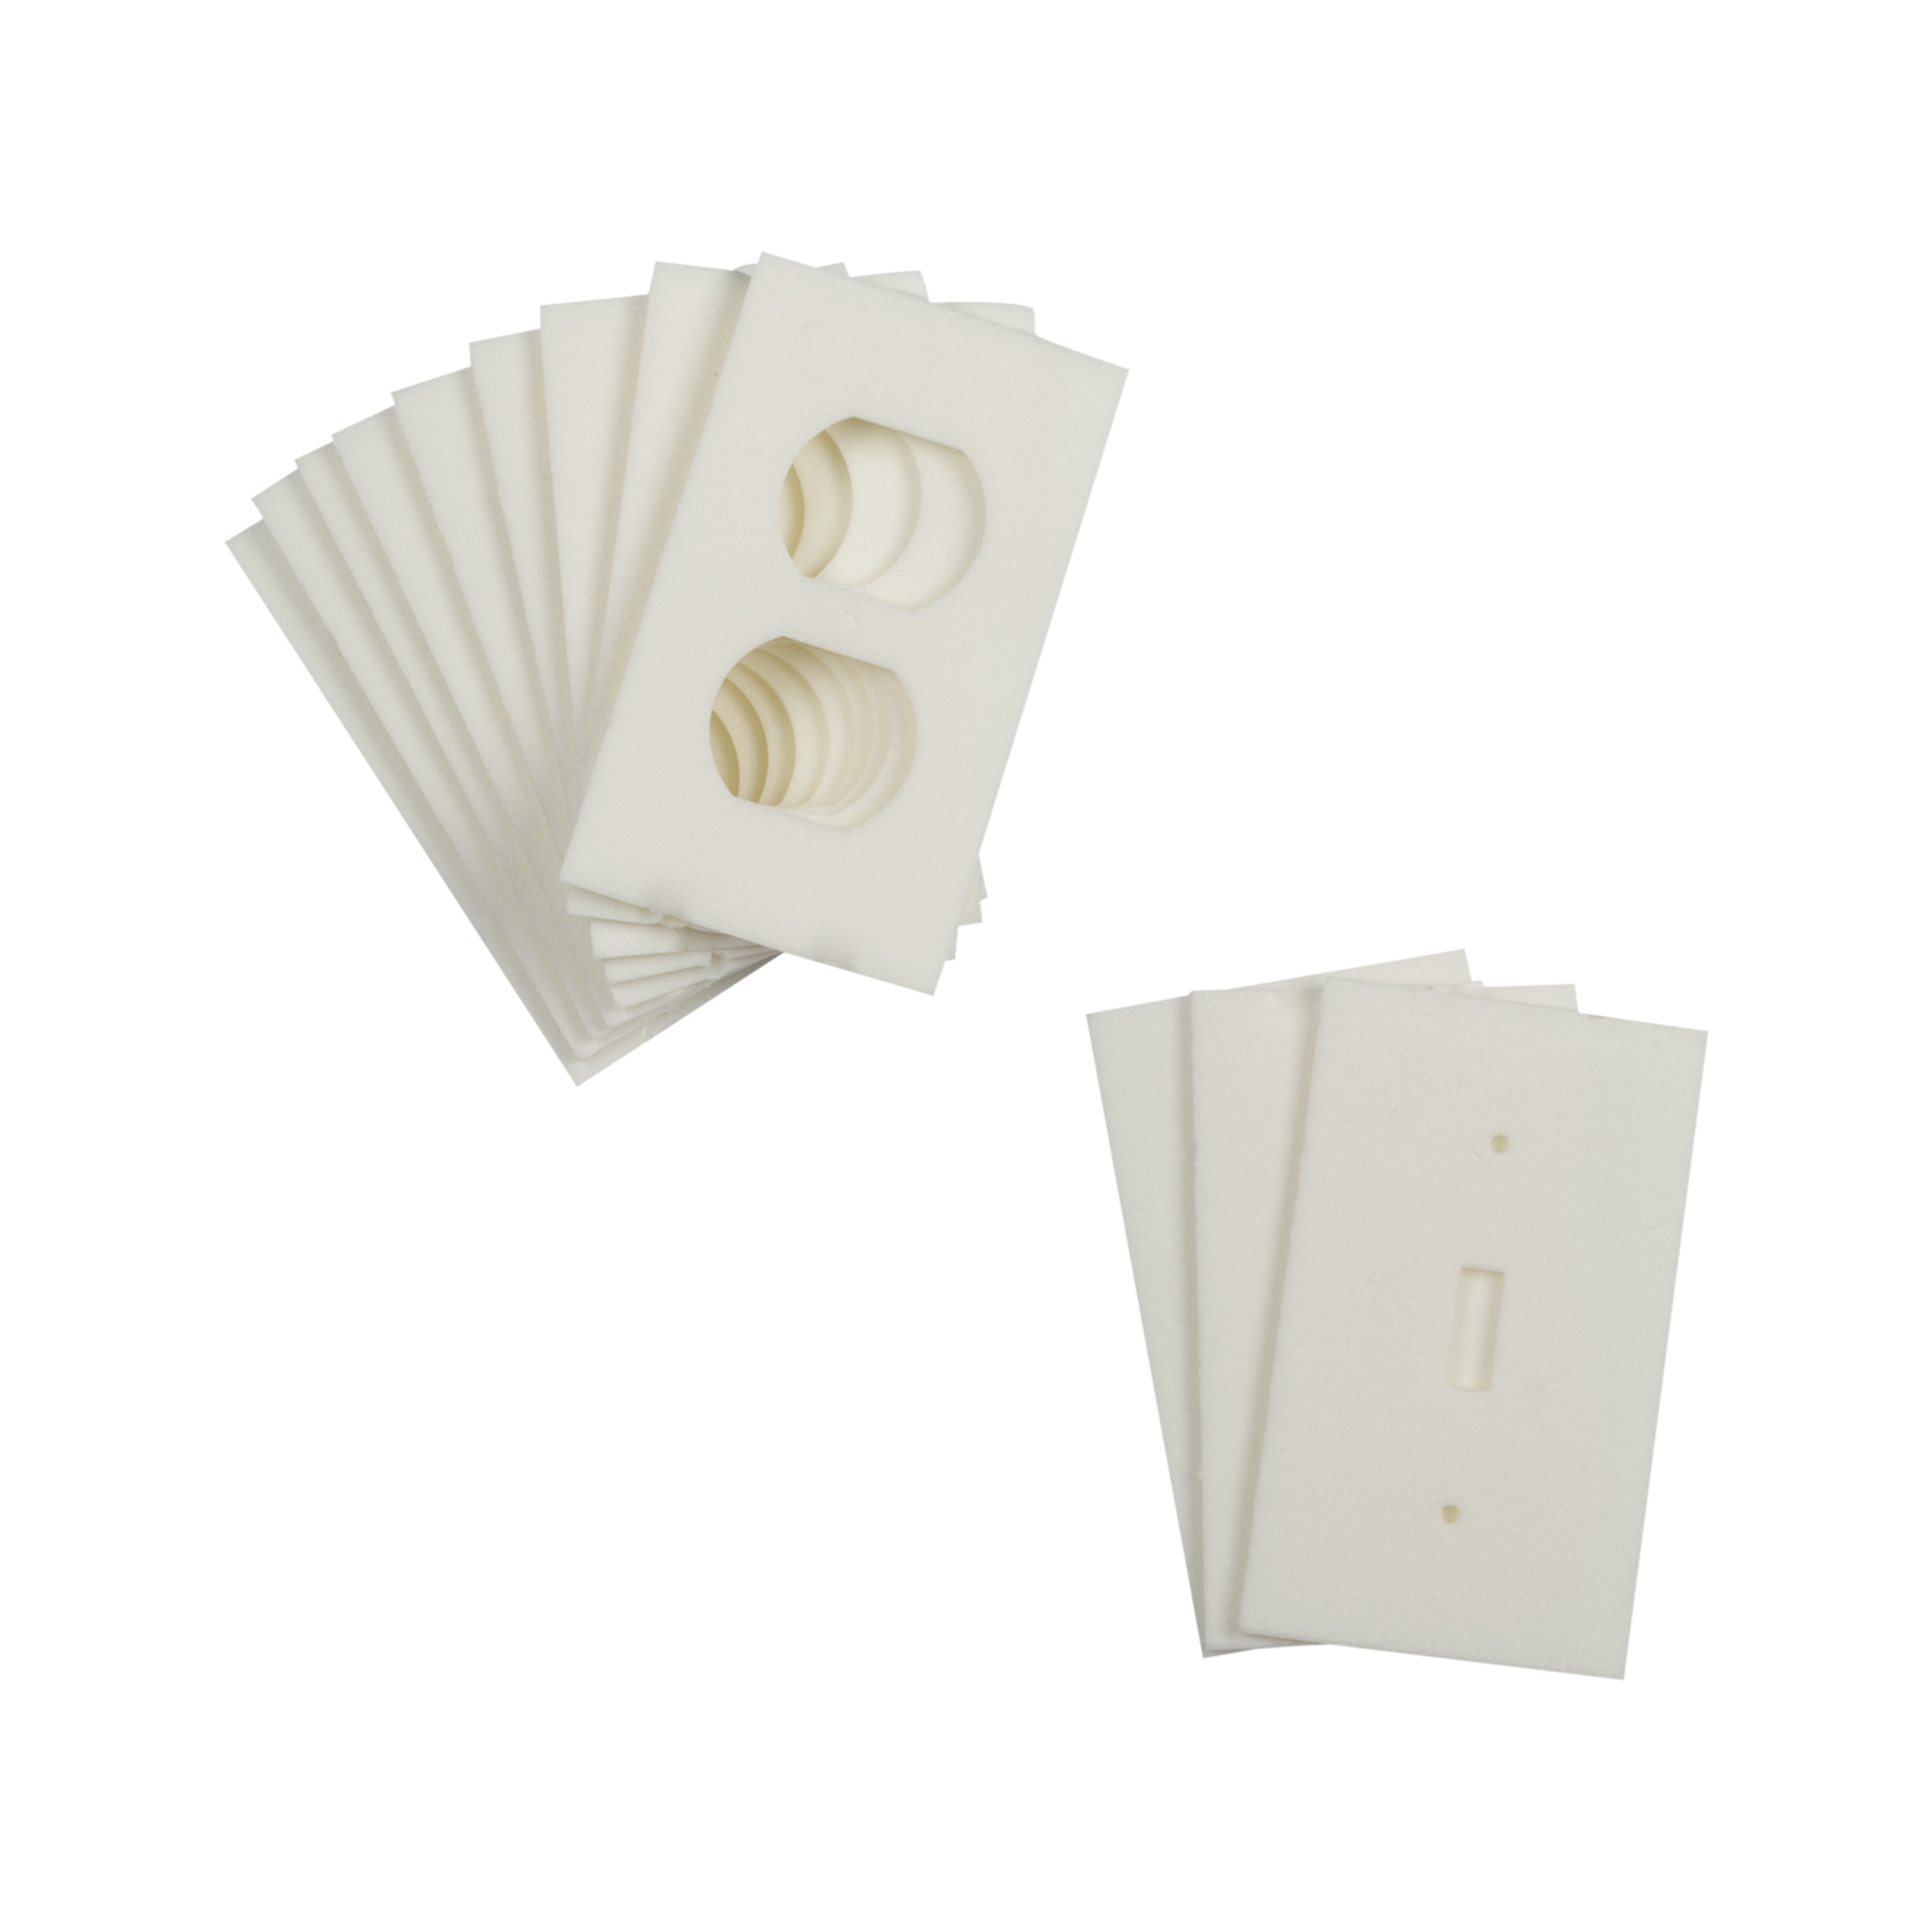 Duck Brand White Foam Insulating Seal Socket Sealers, 2 Pack - image 5 of 10